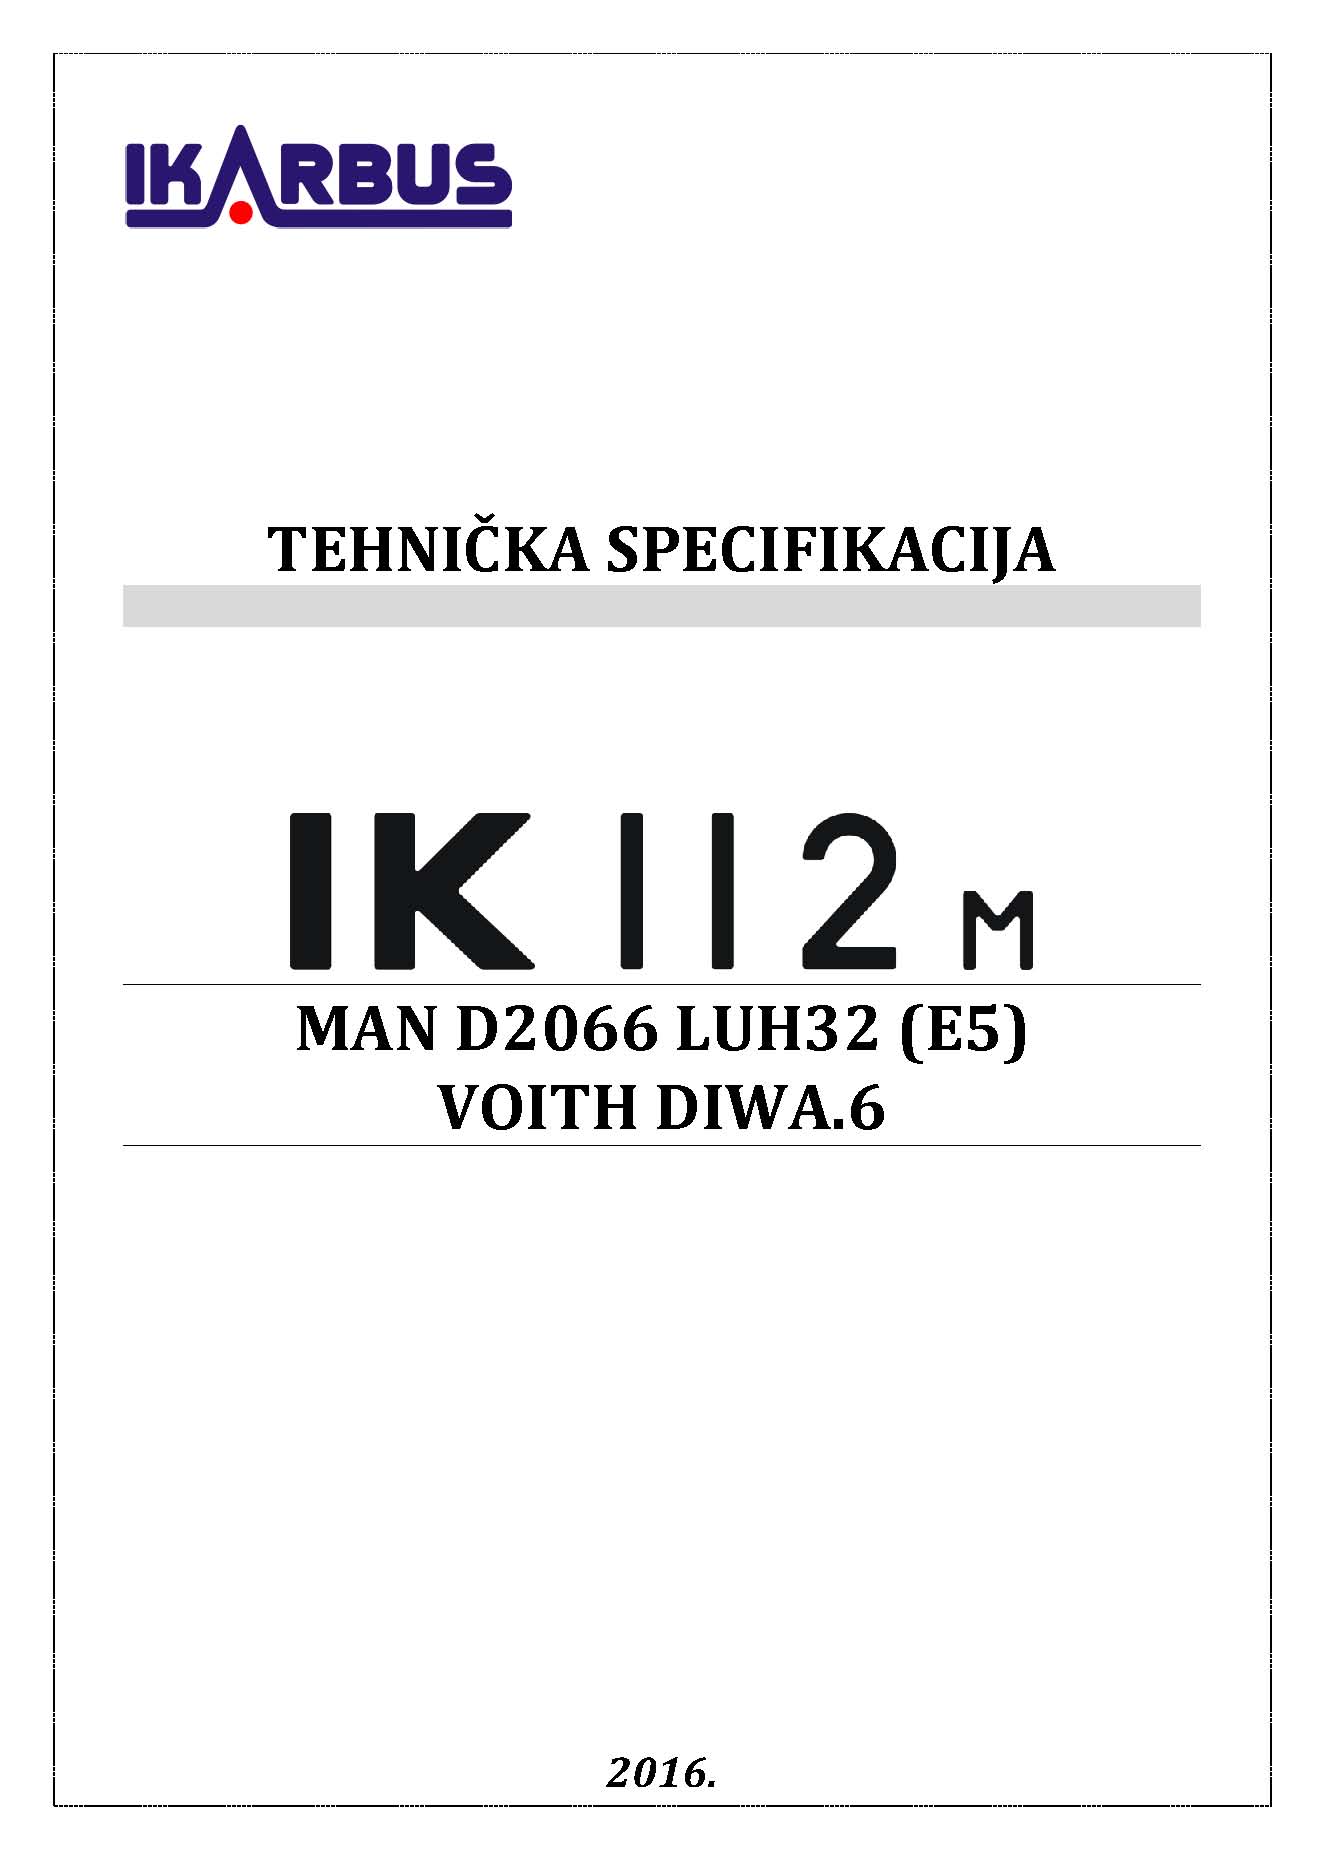 TS IK112M web1 SR